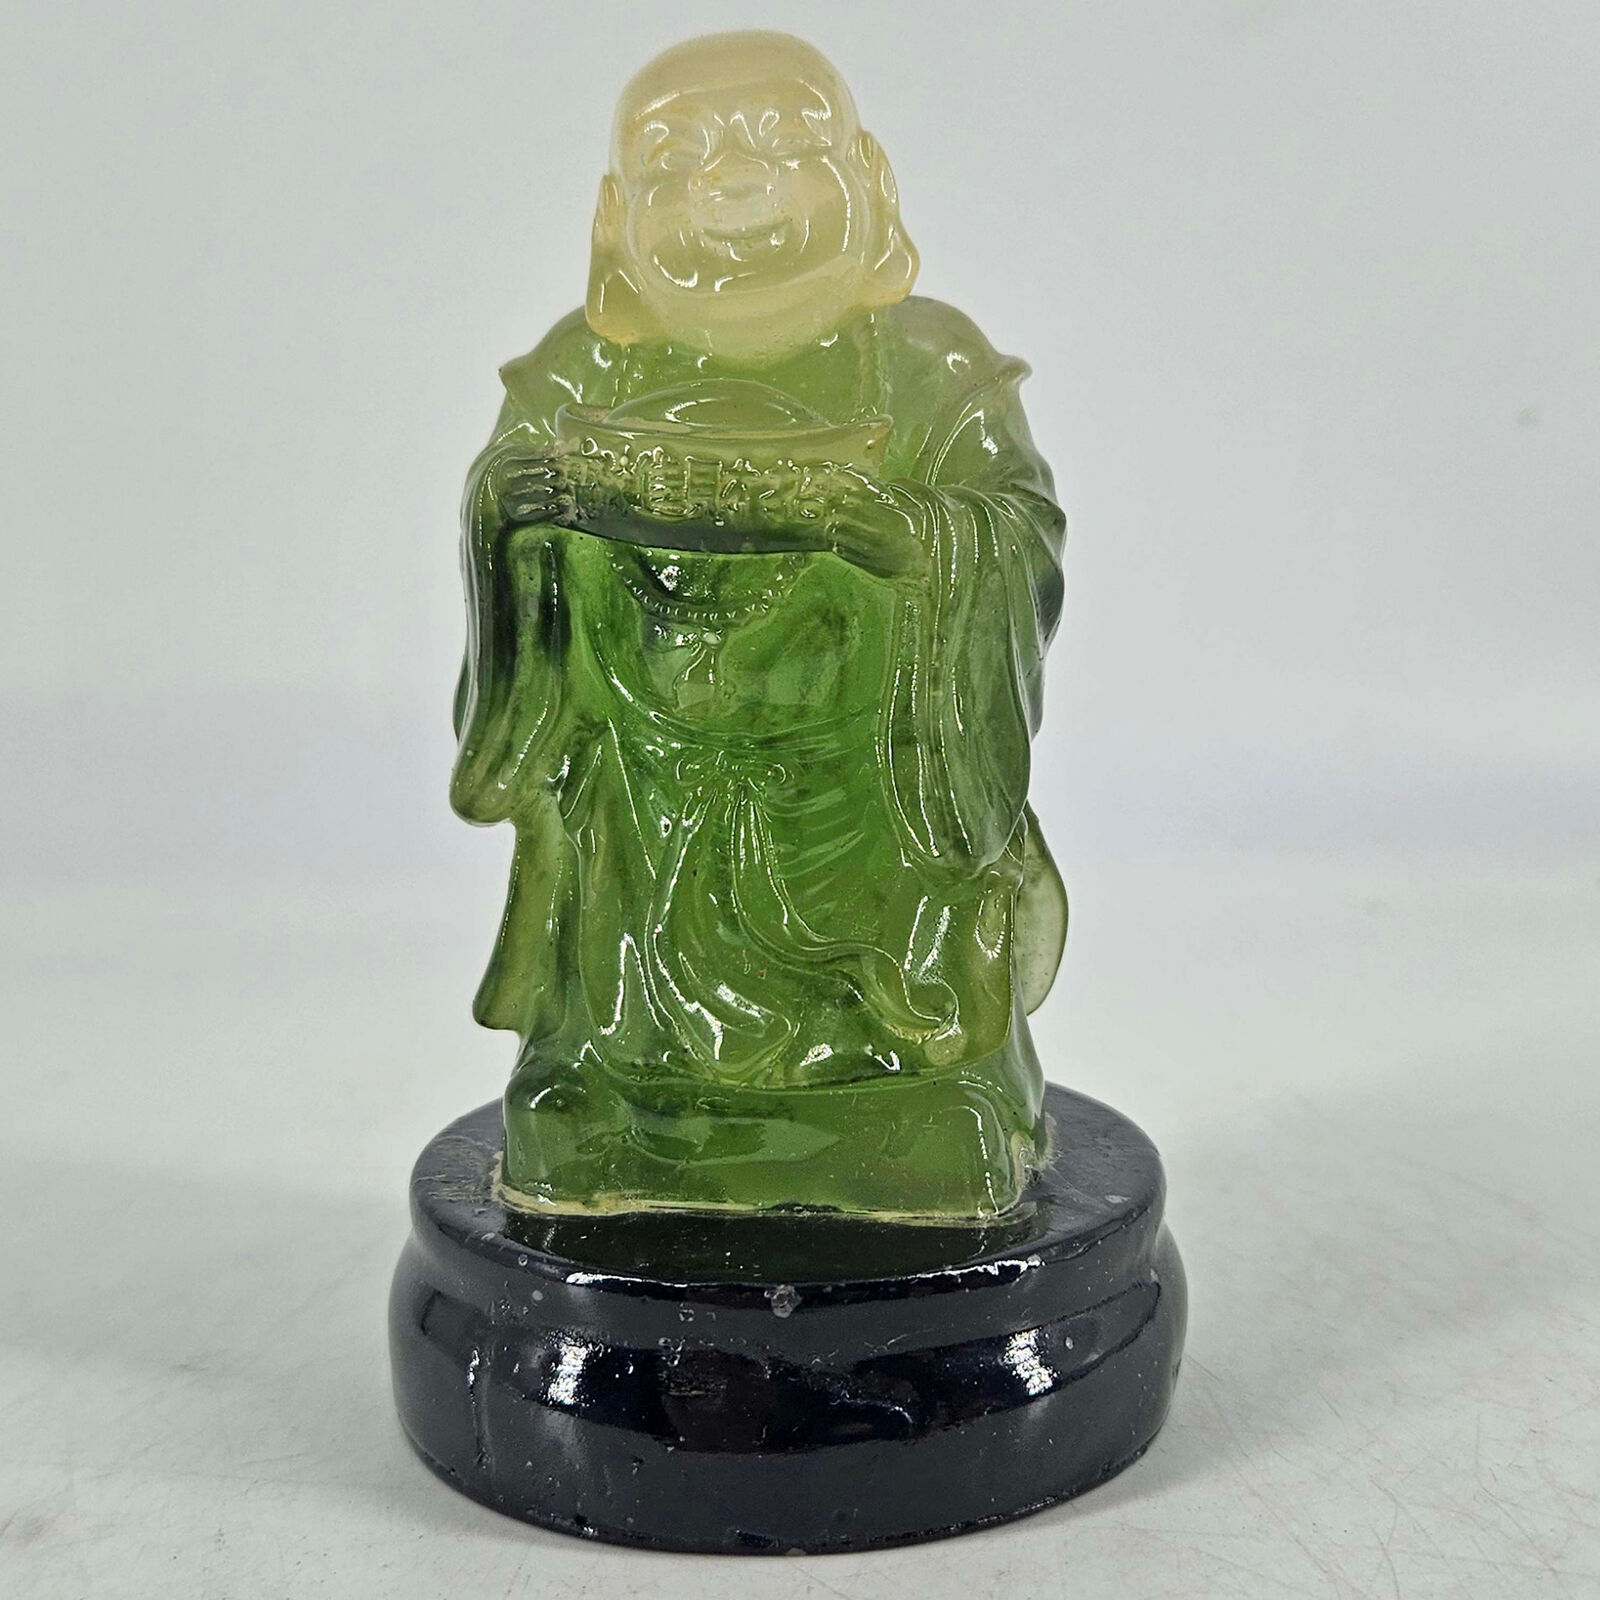 Vintage Chinese faux jadite resin Buddha Statue Figurine Decoration